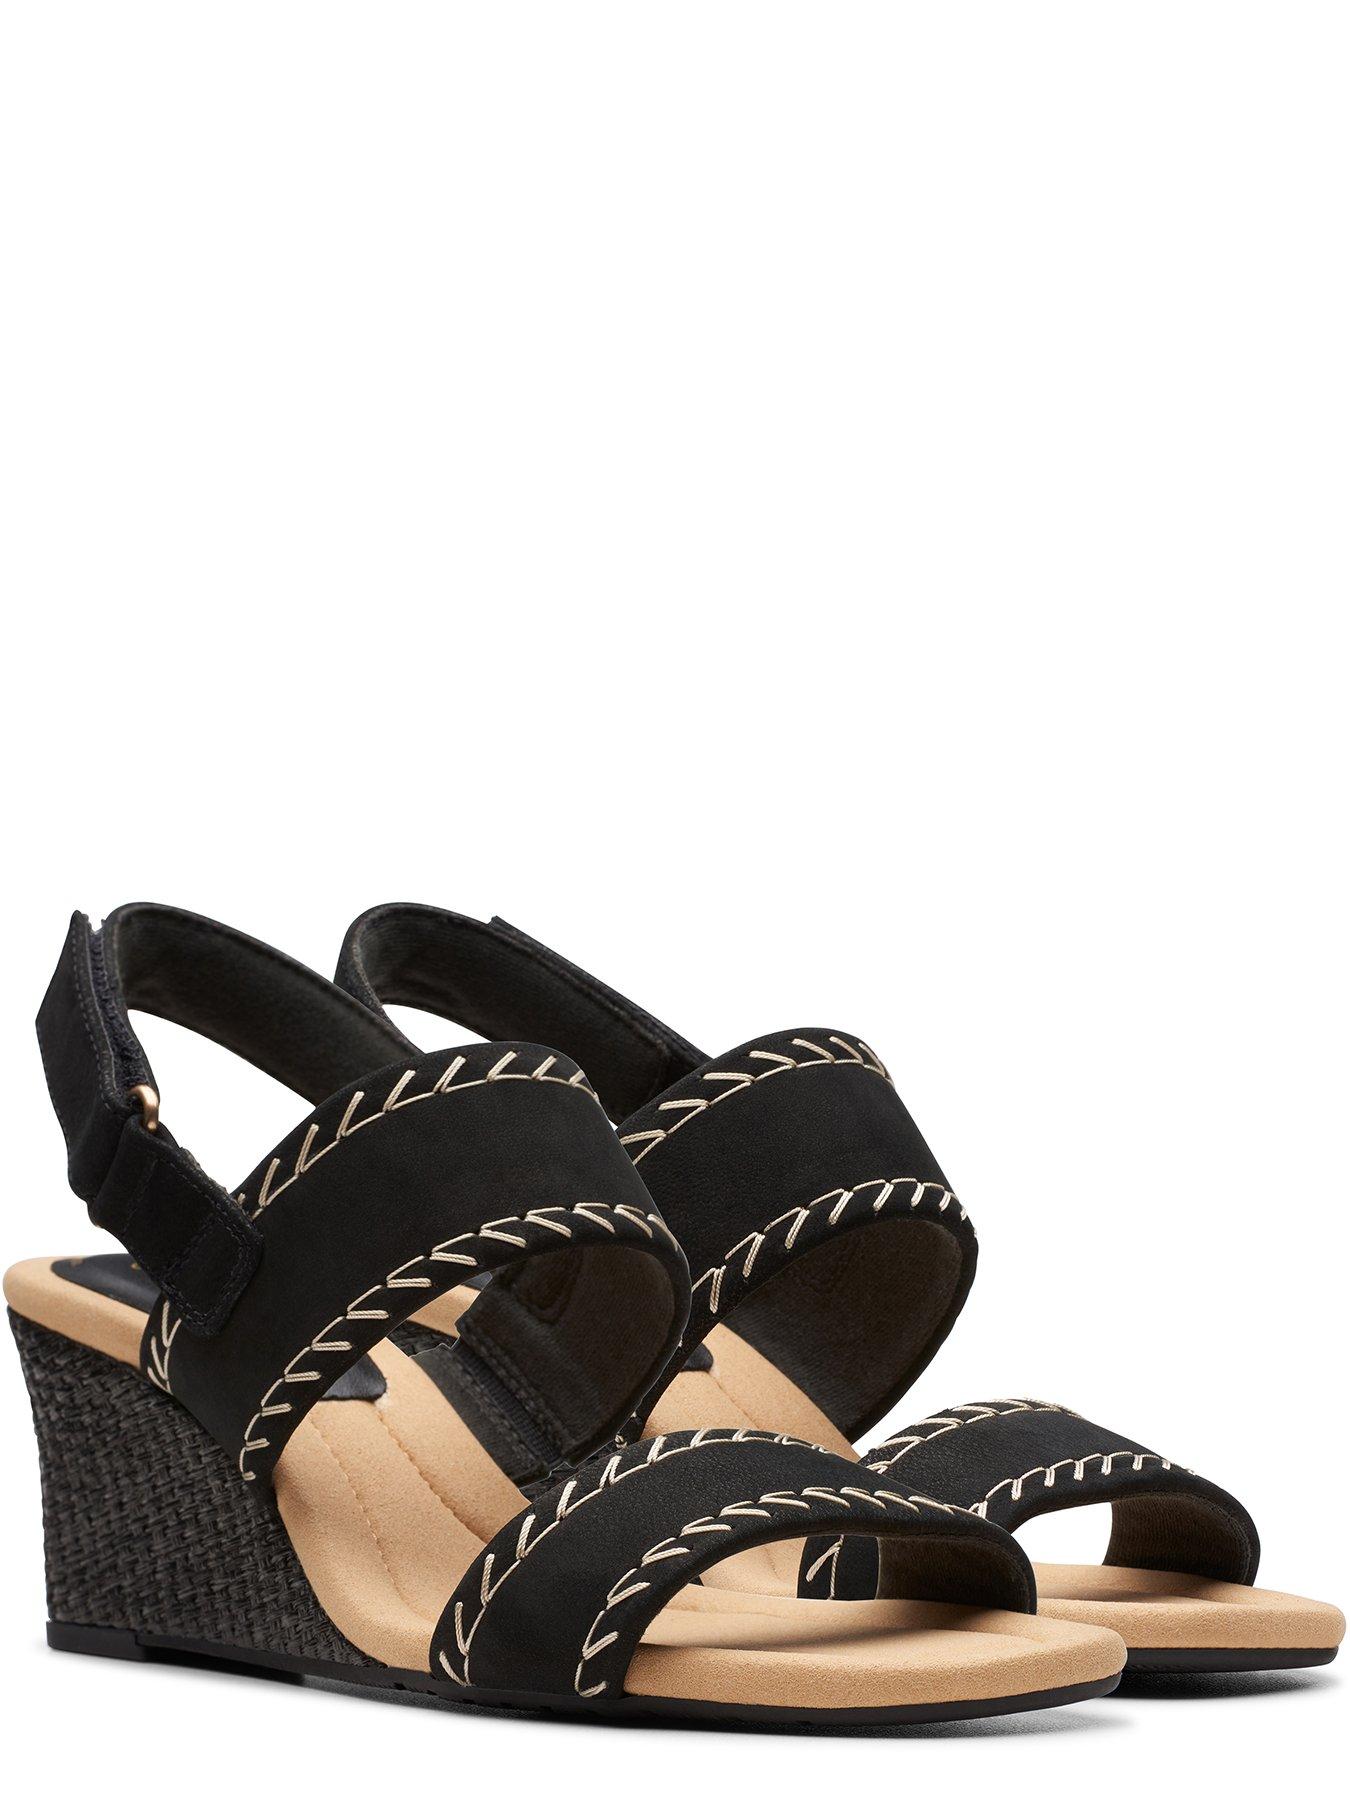 Clarks Kyarra Rose Leather Wedged Heel Sandals - Black | Very.co.uk